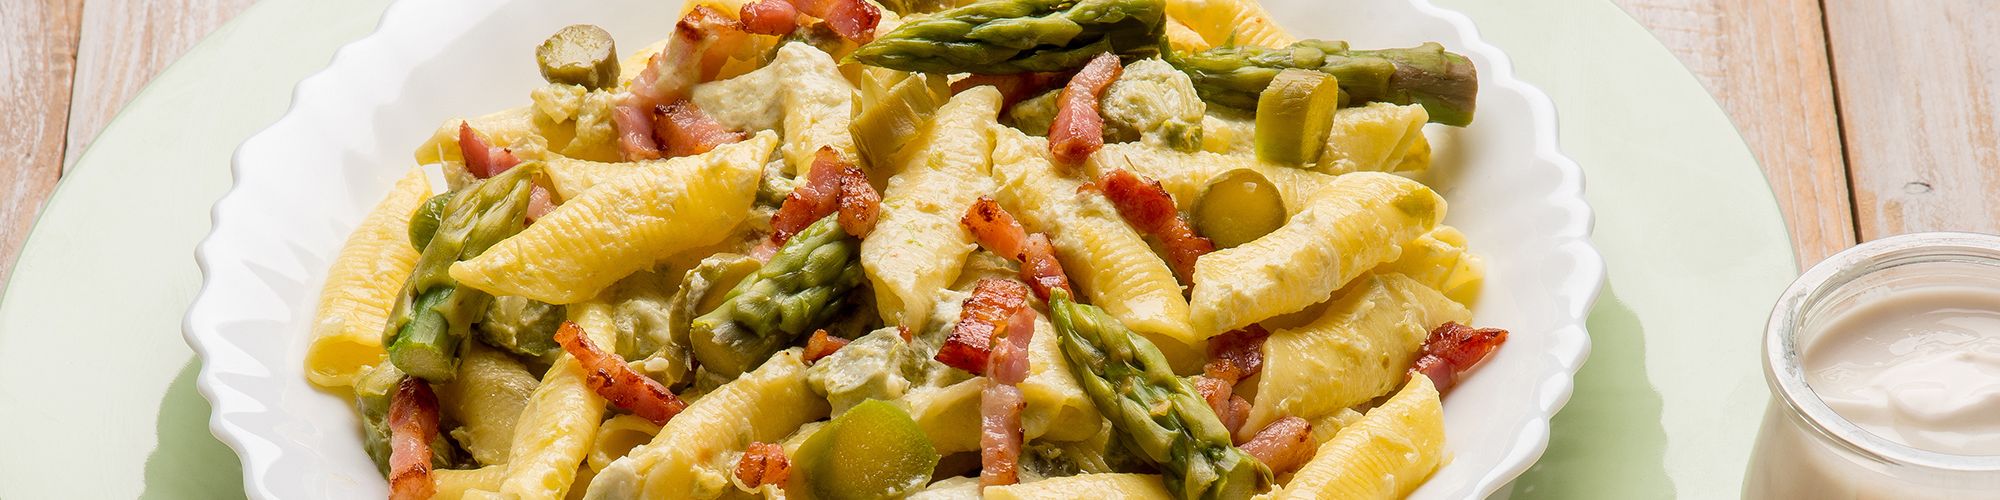 ricetta Garganelli con asparagi, panna e speck con pasta fresca